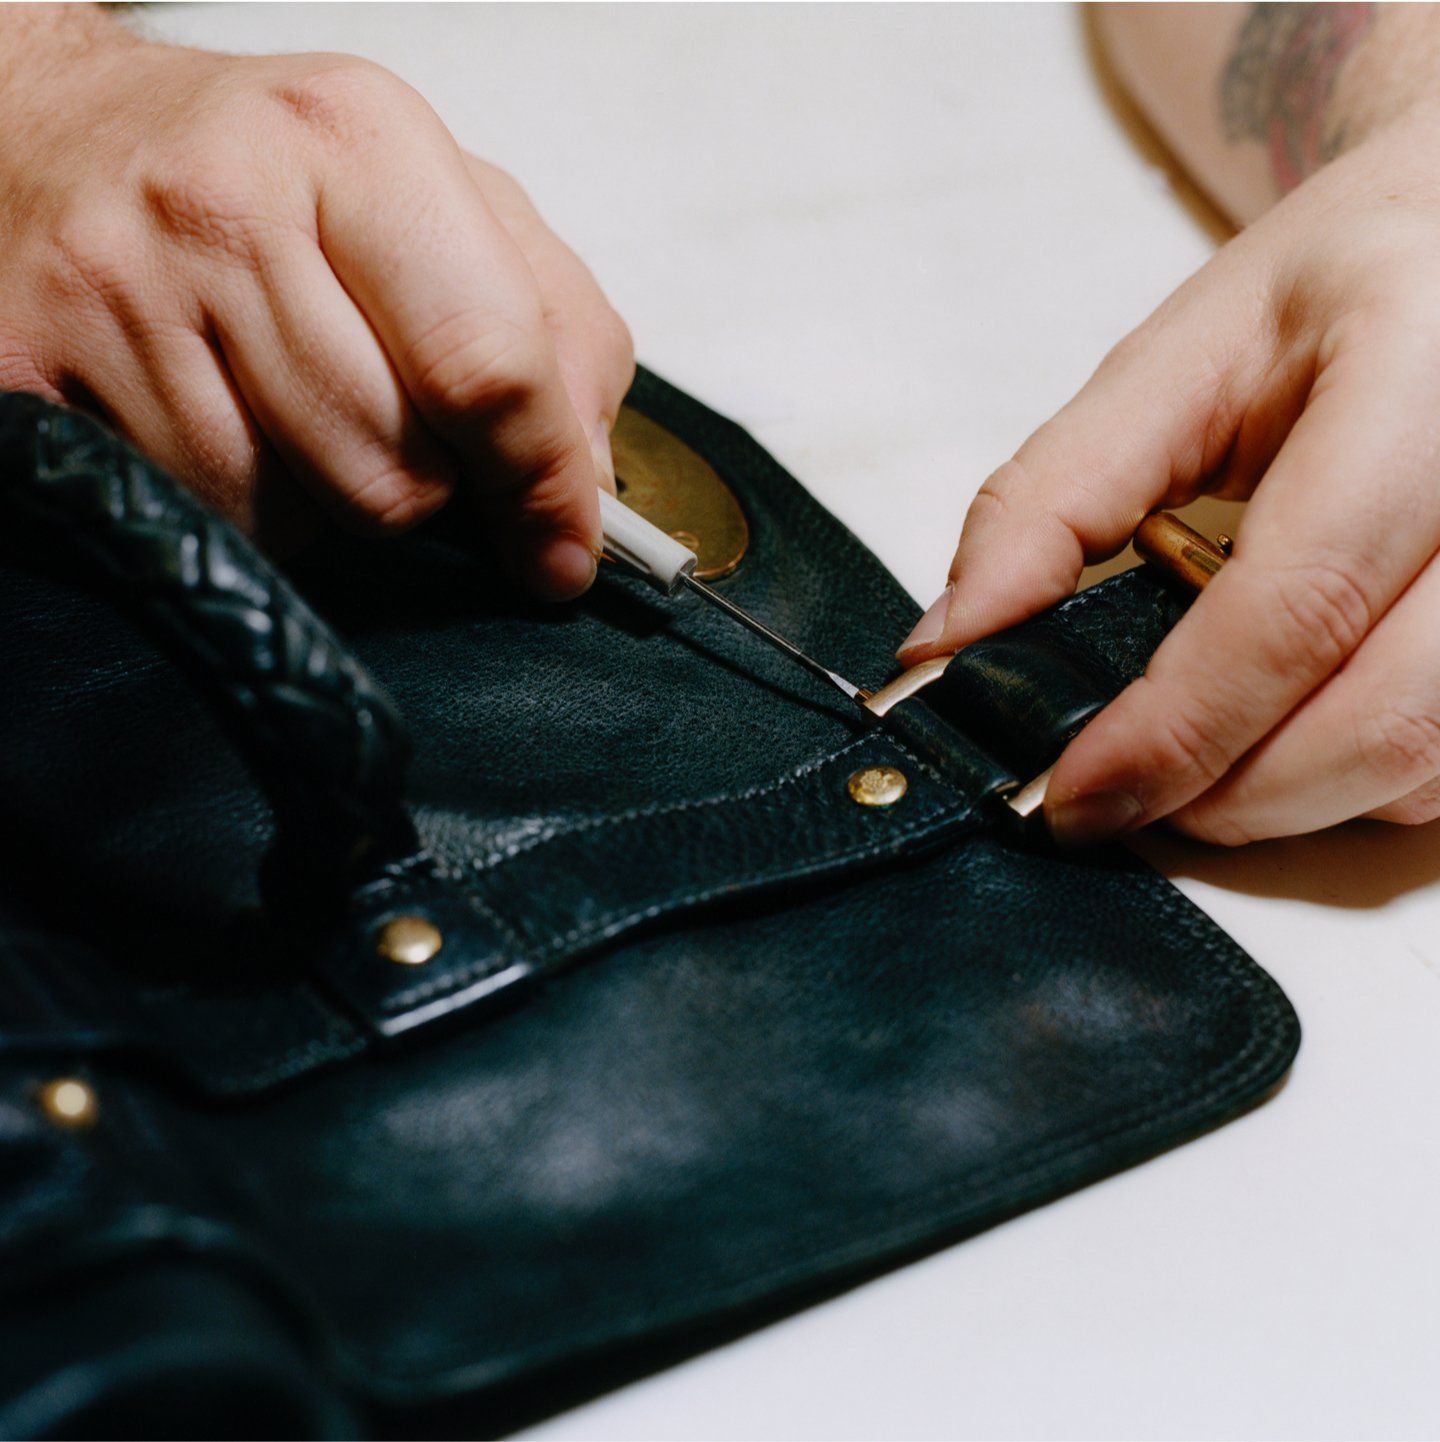 Black leather handbag being repaired